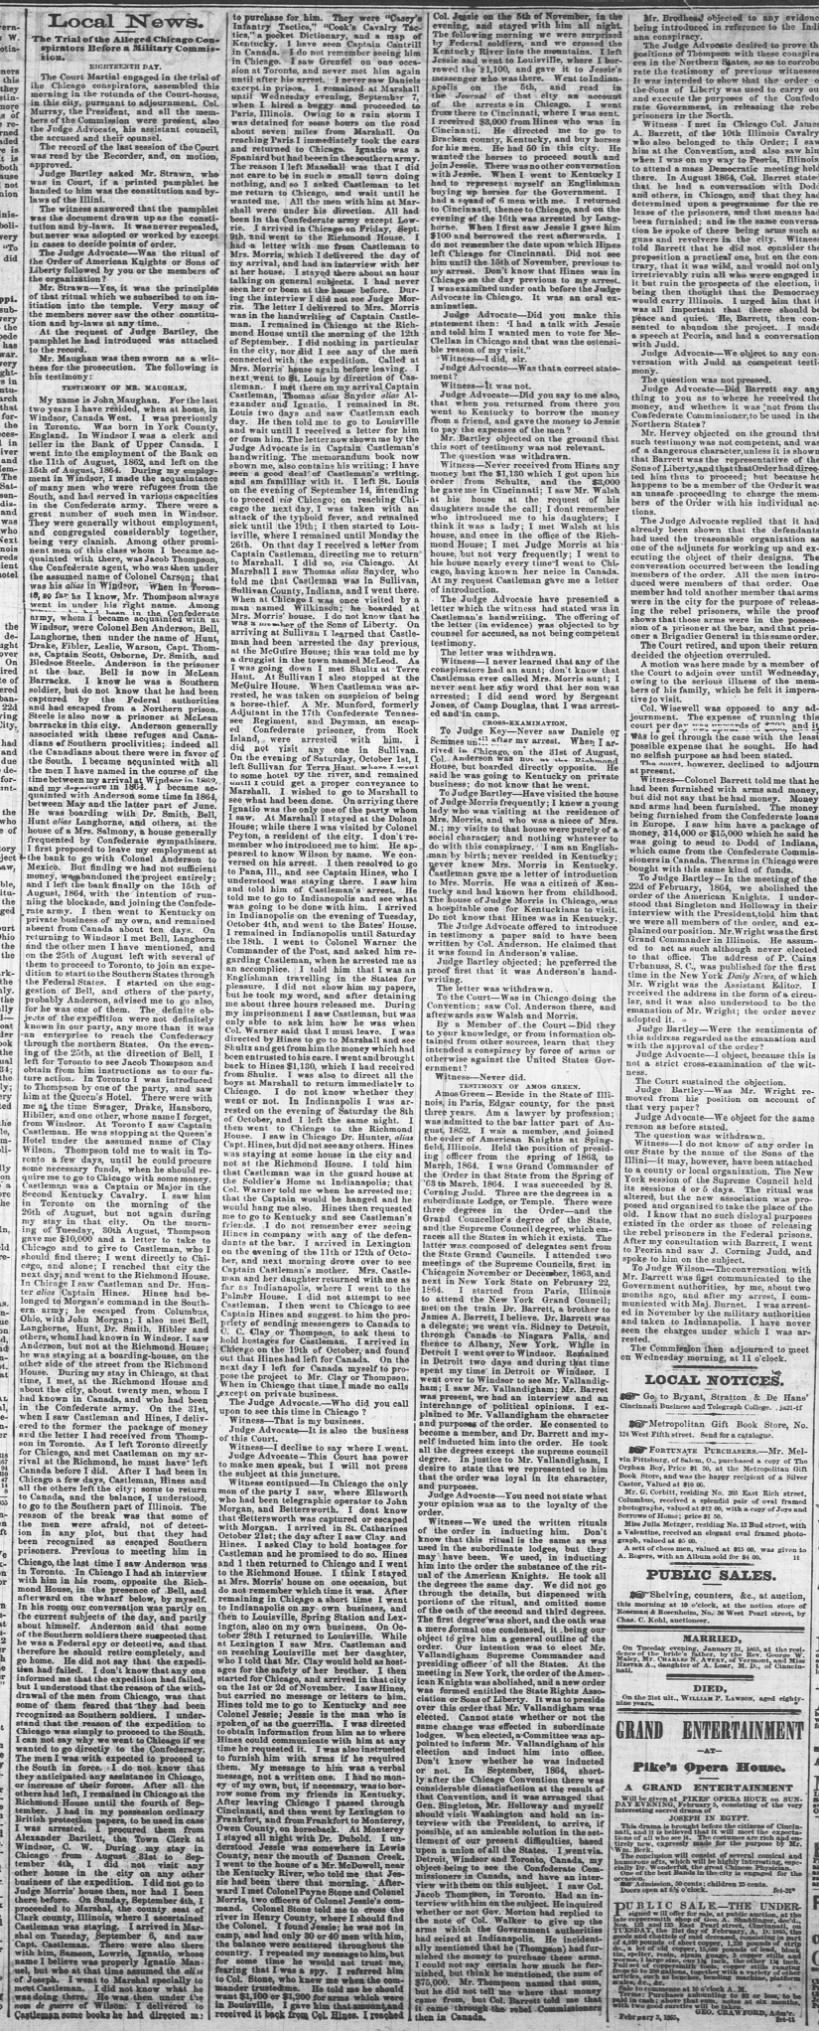 Military Trial of the Alleged Chicago Conspirators at Cincinnati - 1865